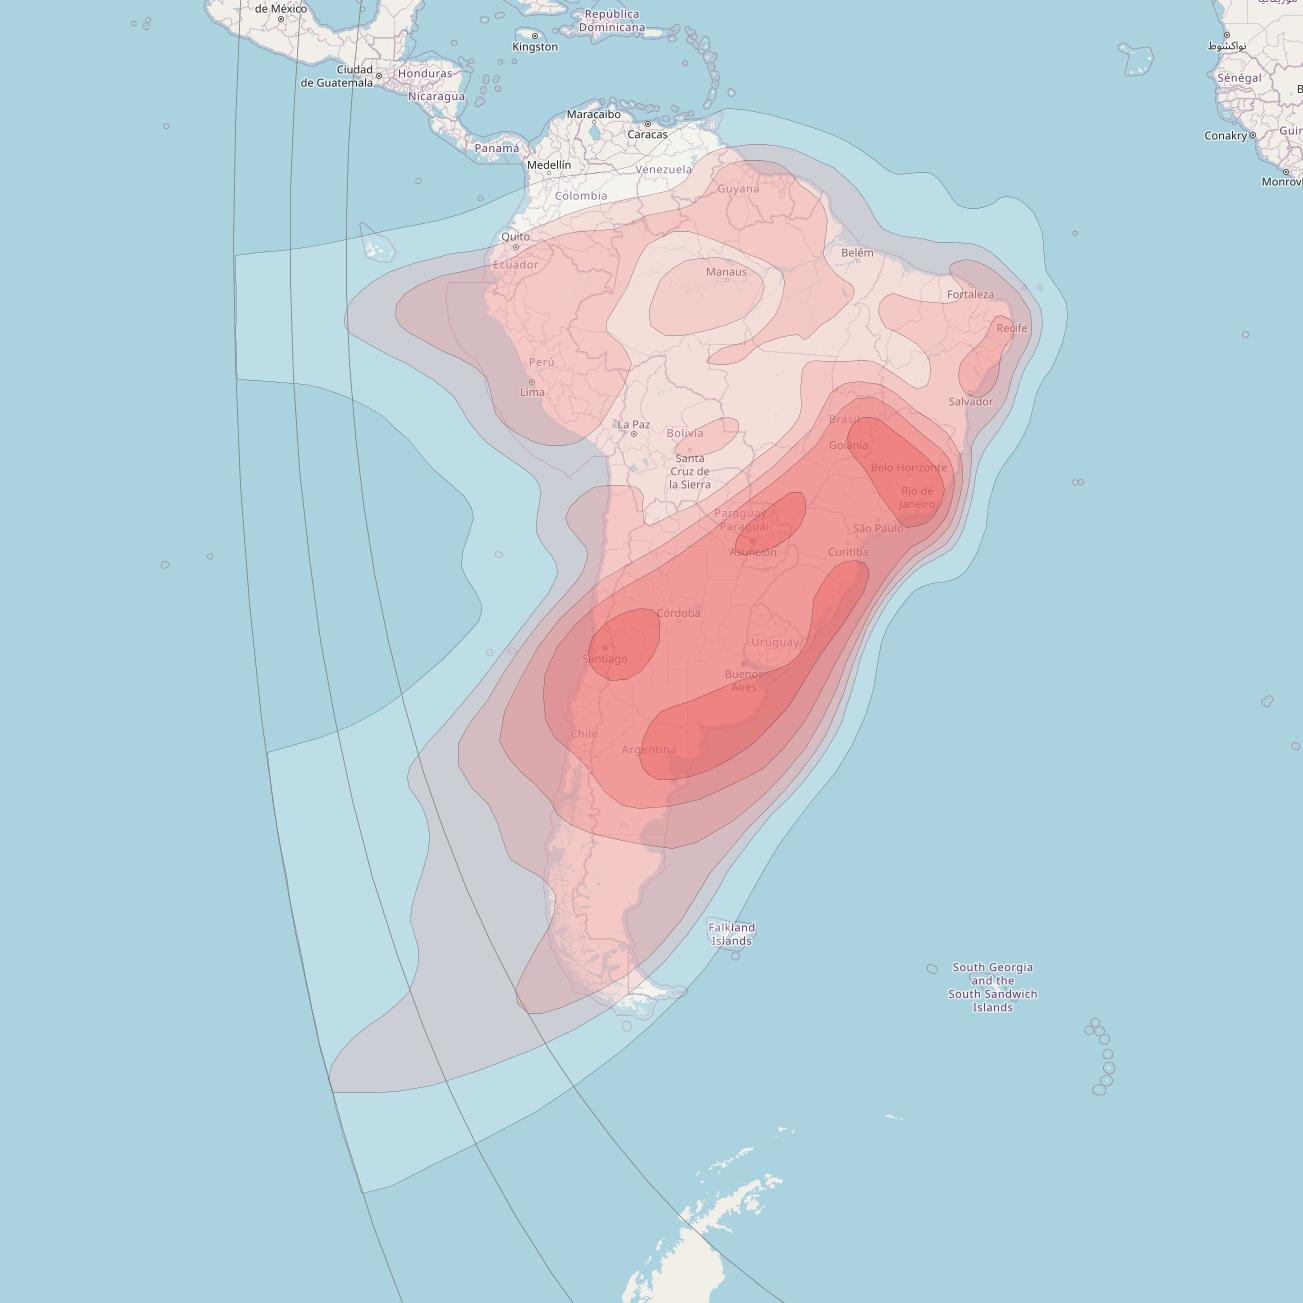 SES 4 at 22° W downlink Ku-band South America Beam coverage map